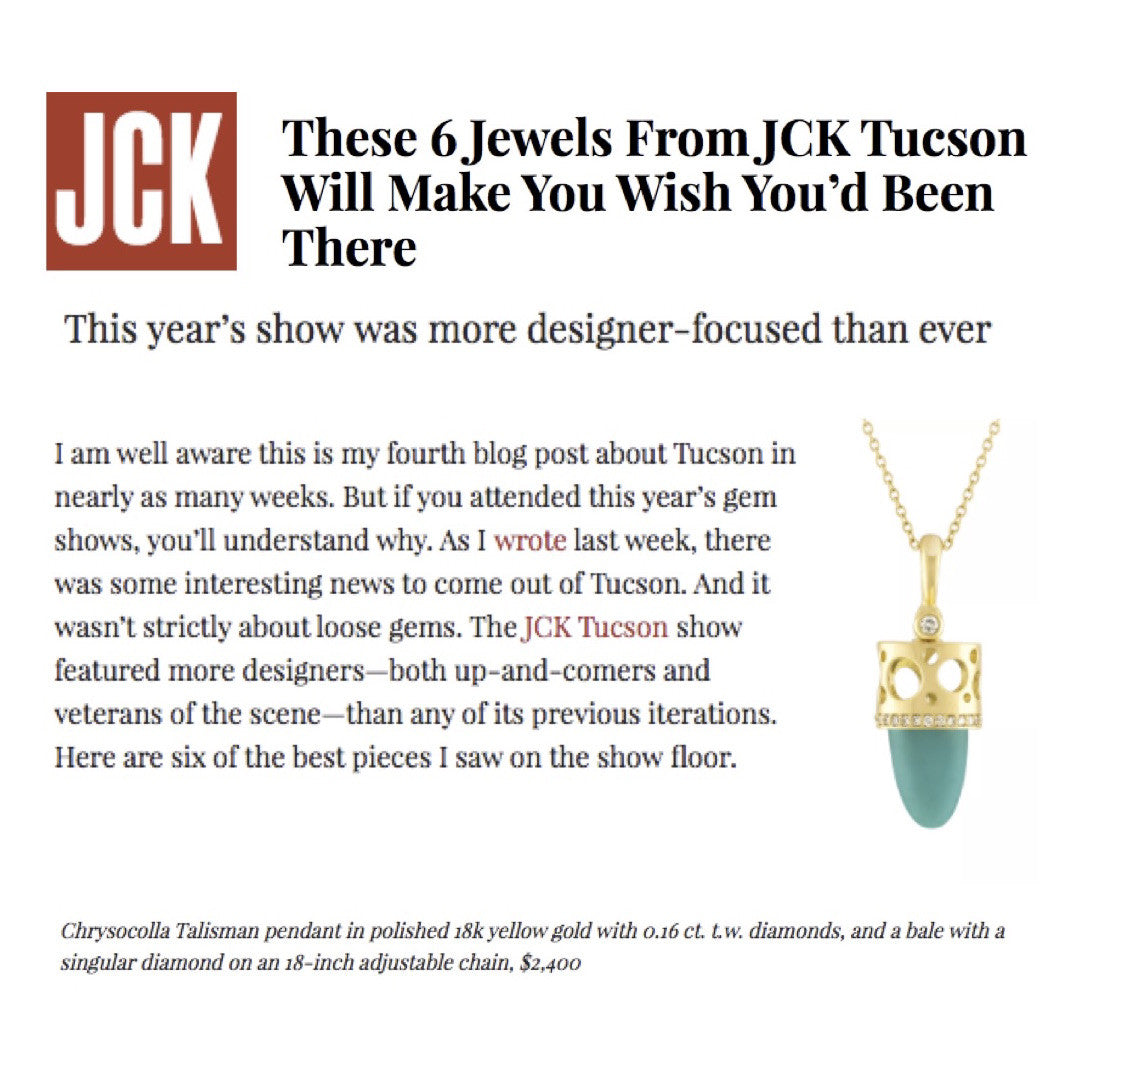 Chrysocolla Talisman Pendant featured on JCK Online